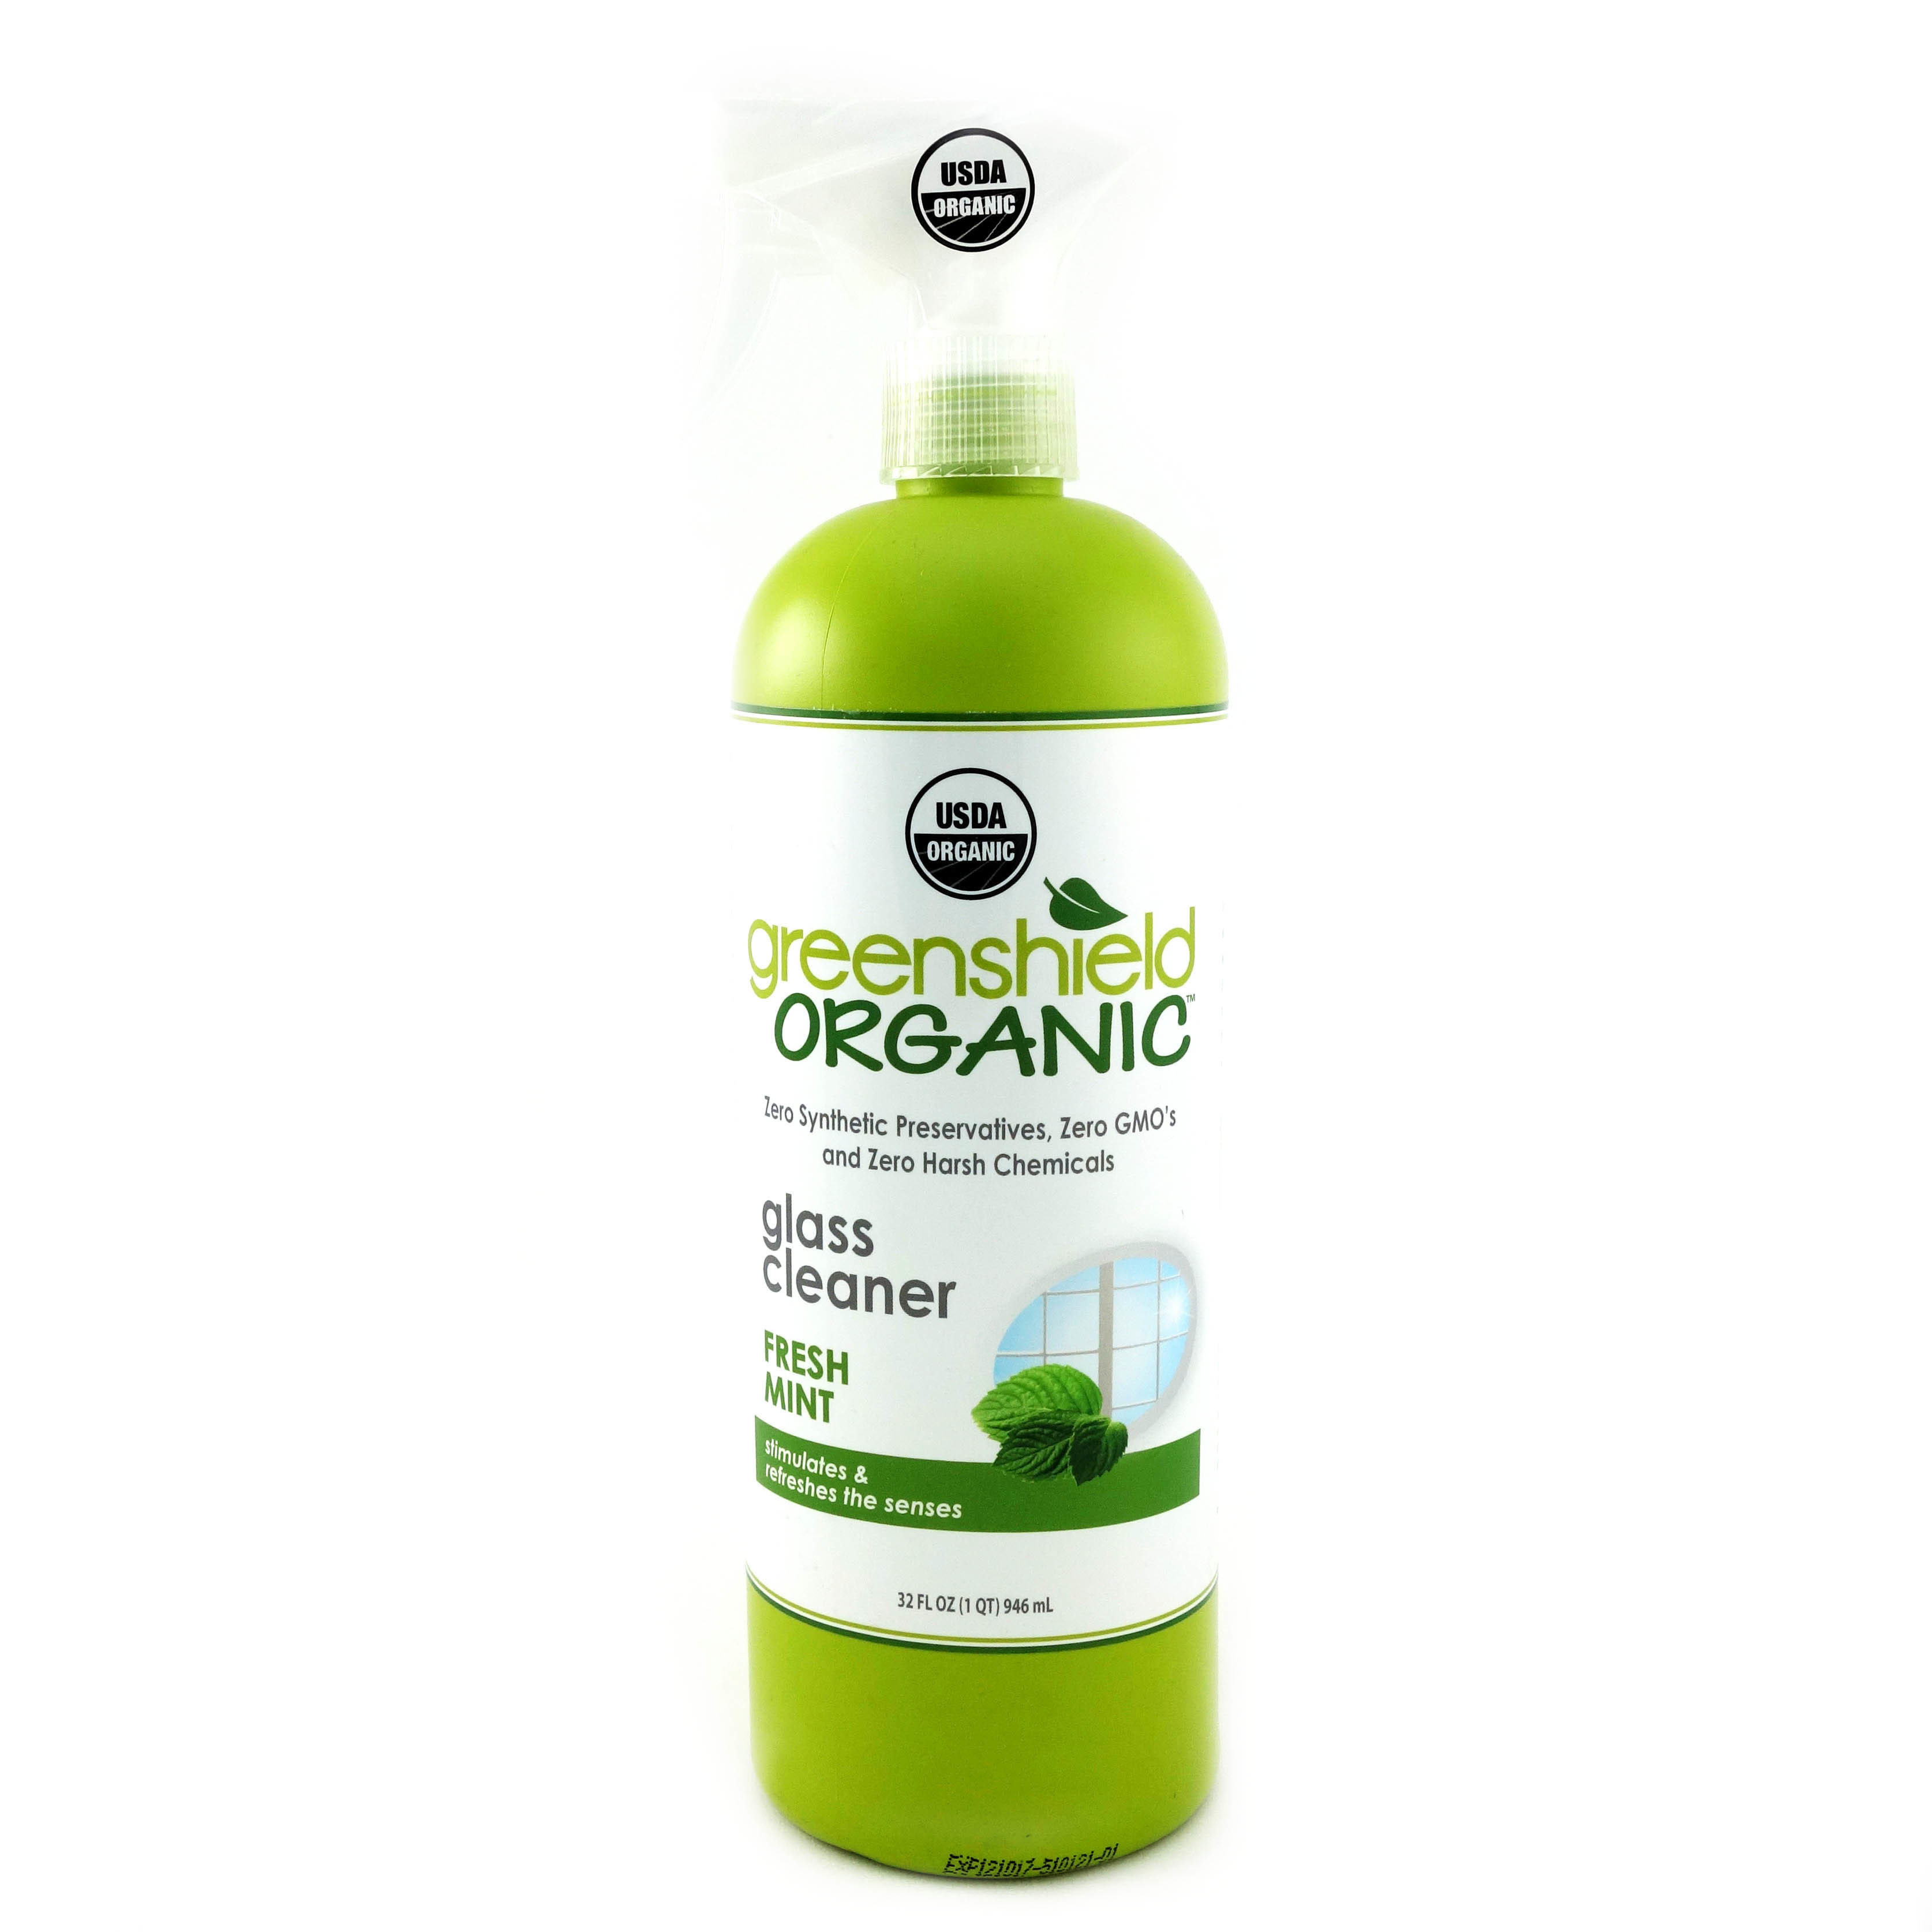 Greenshield Organic Glass Cleaner (Fresh Mint) 946ml - US*